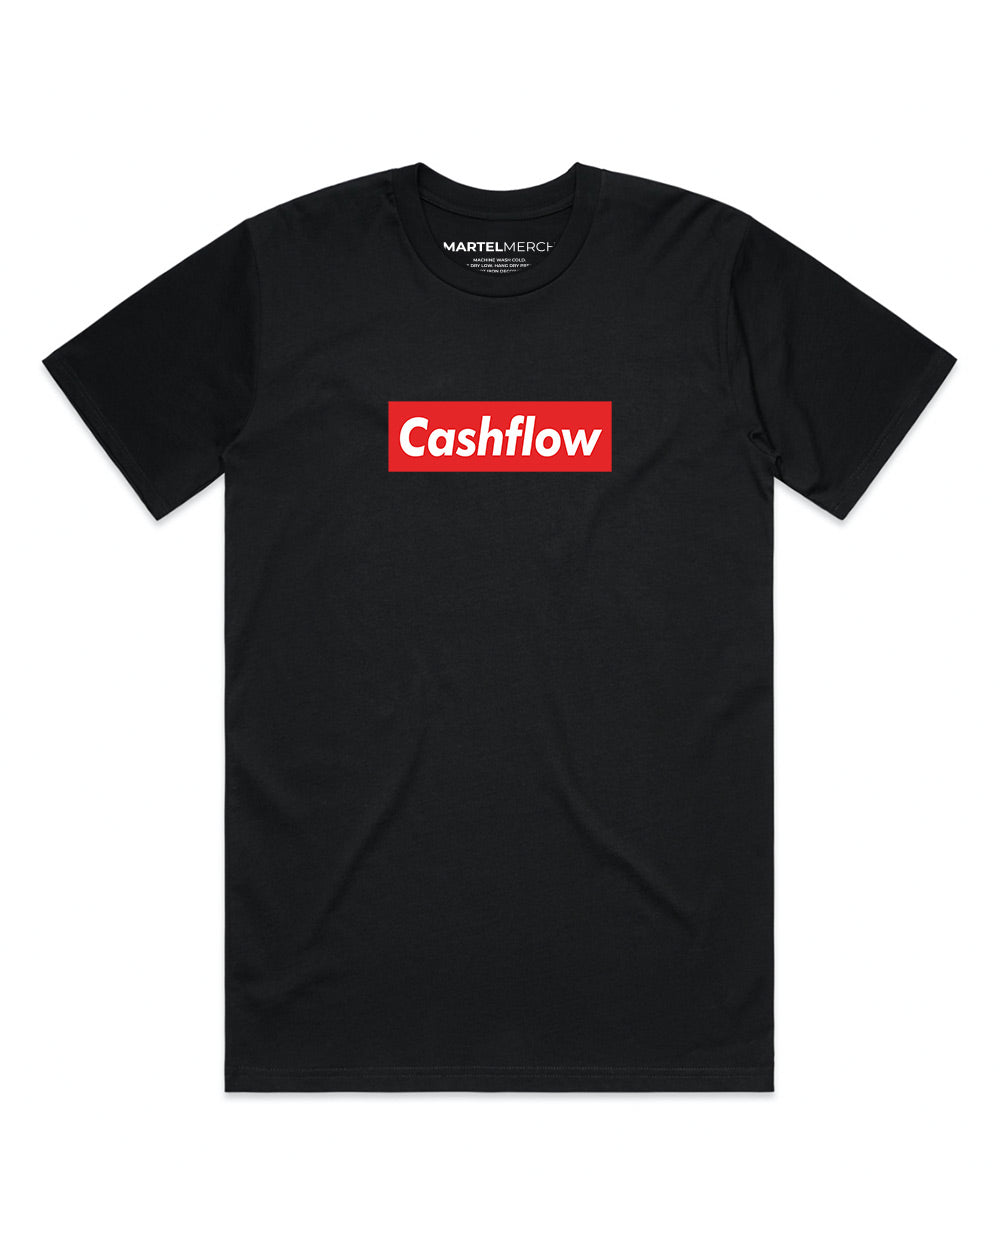 Limited Cashflow Shirt- Black